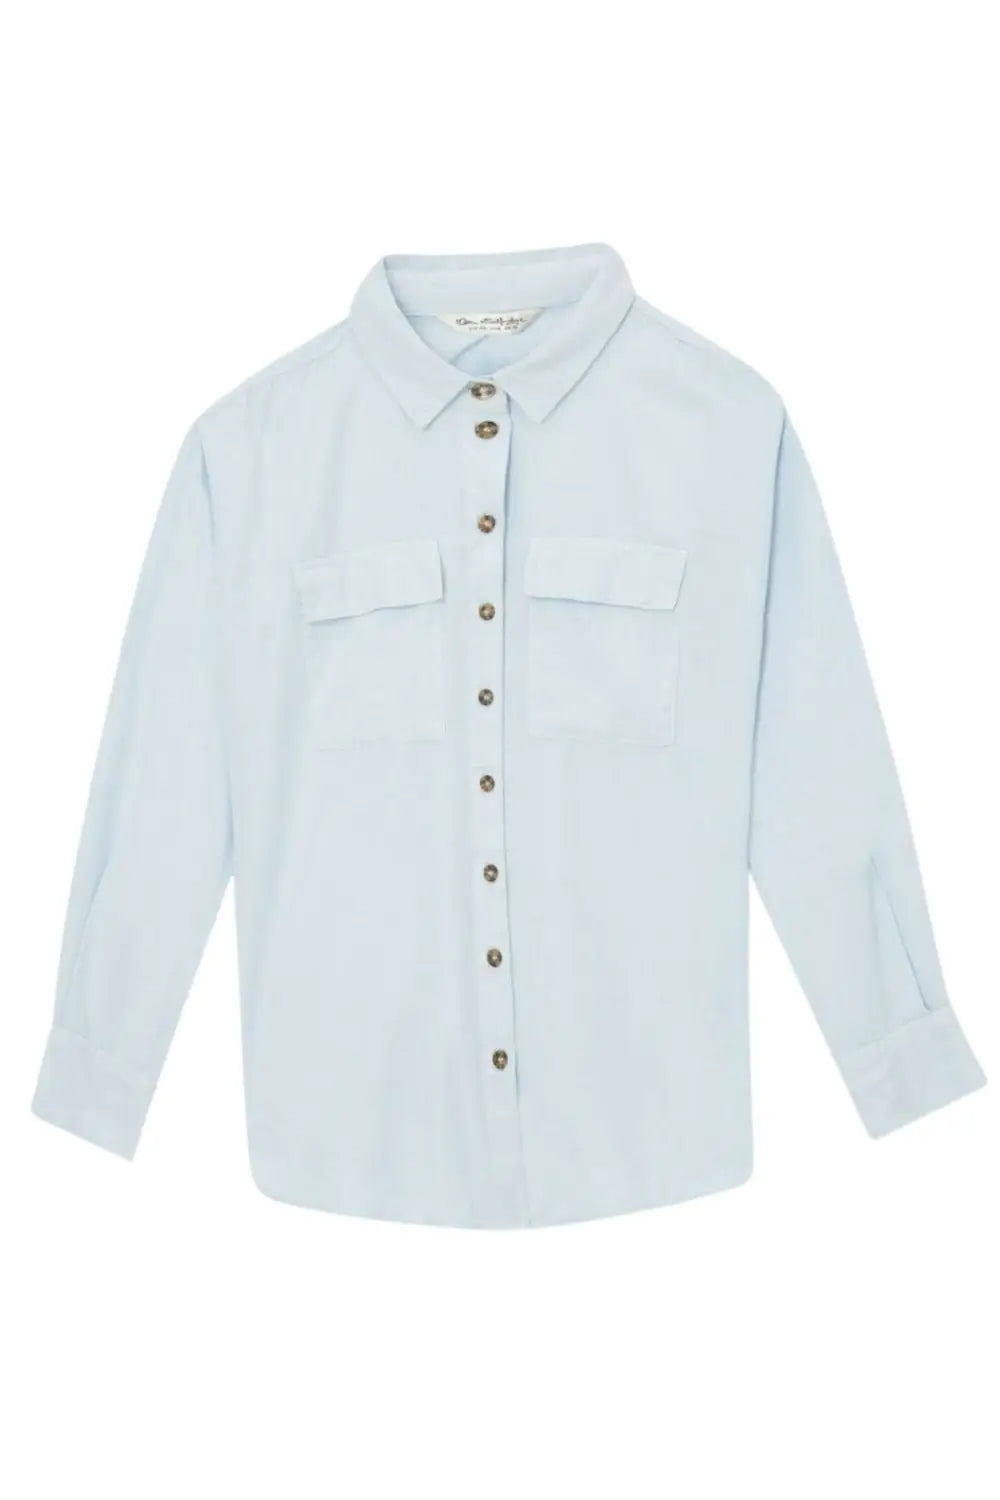 Miss Selfridge Cupro Pocket Shirt